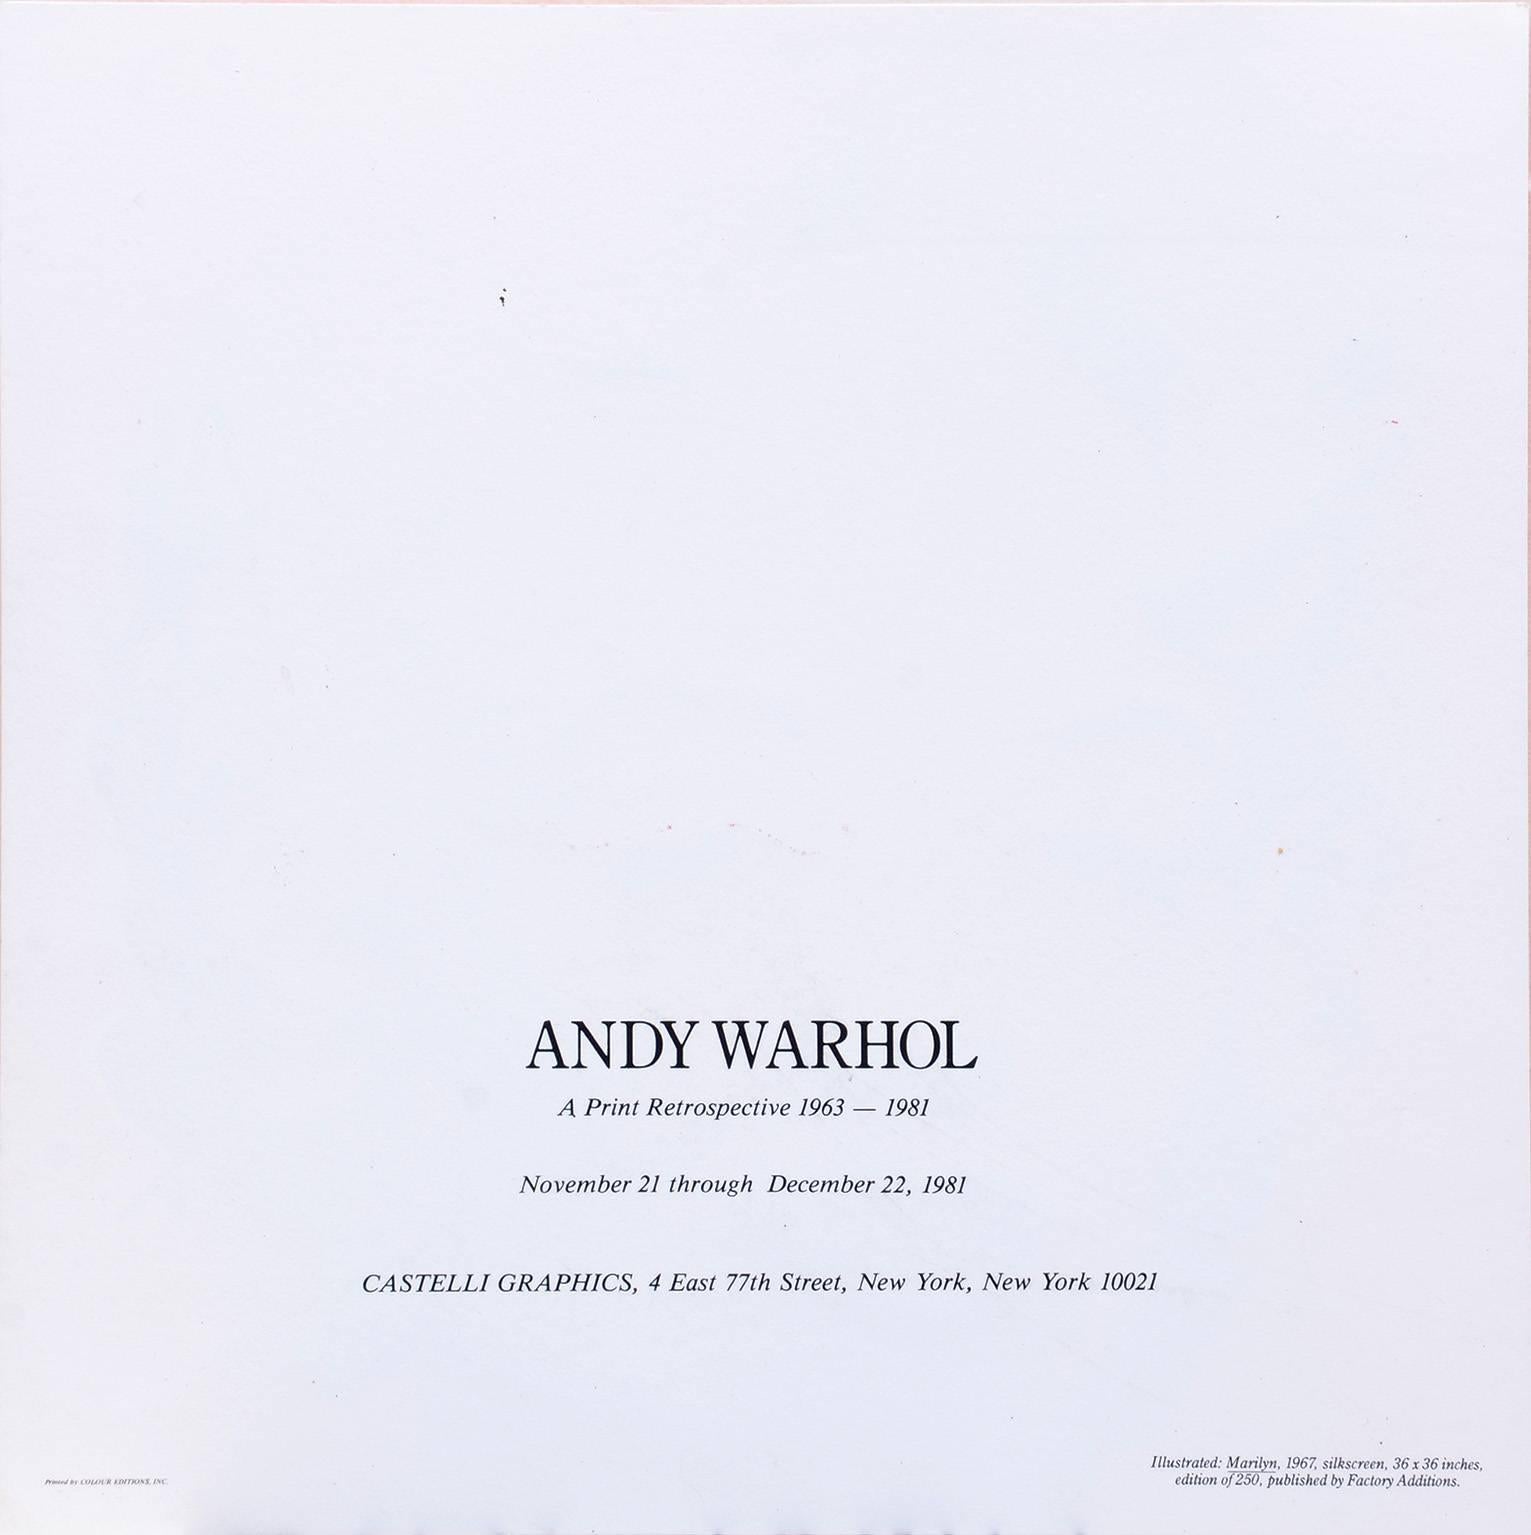 American Warhol, Andy, Marilyn Monroe, Invitation Card, 1981